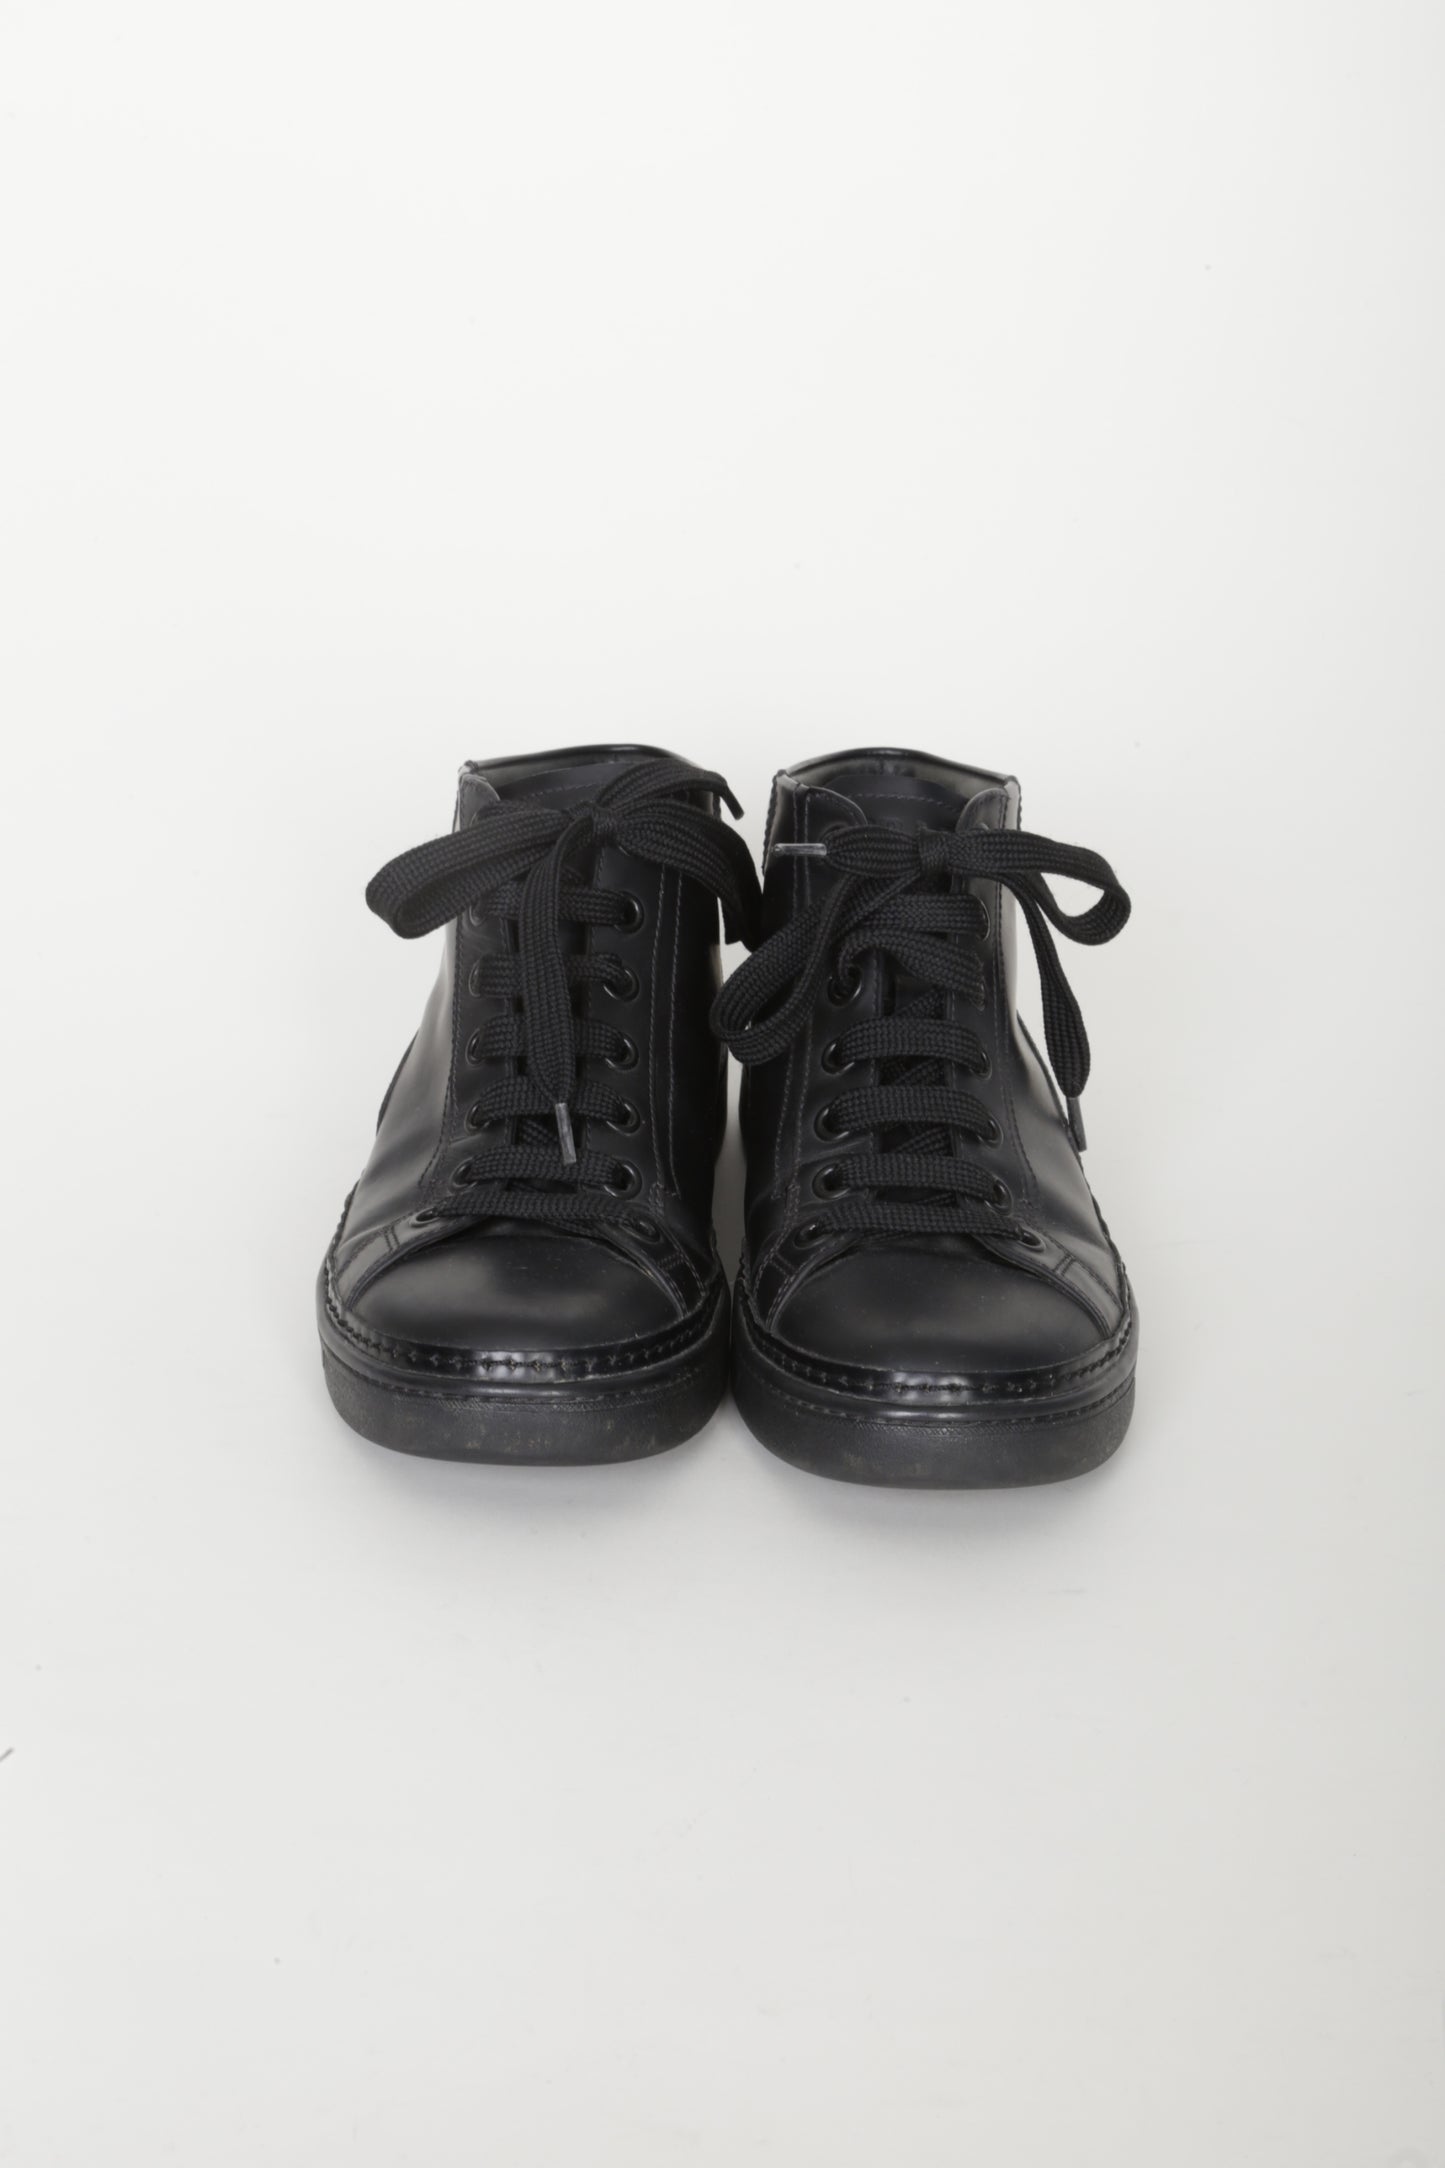 Prada Mens Black Shoes Size N/S